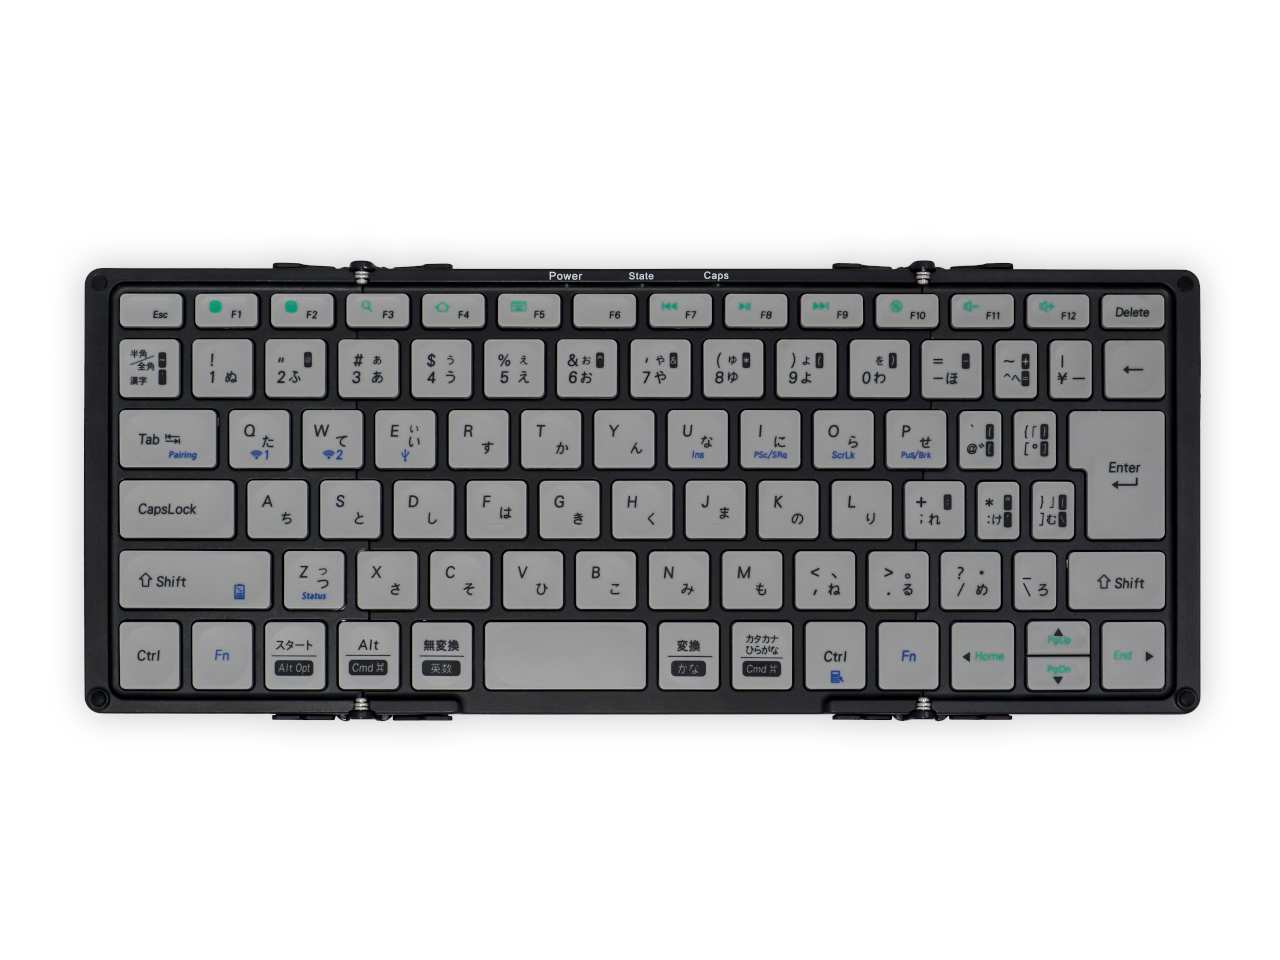 MOBO MOBO Keyboard 2 (ブラック/グレー) 日本語配列折りたたみ式 